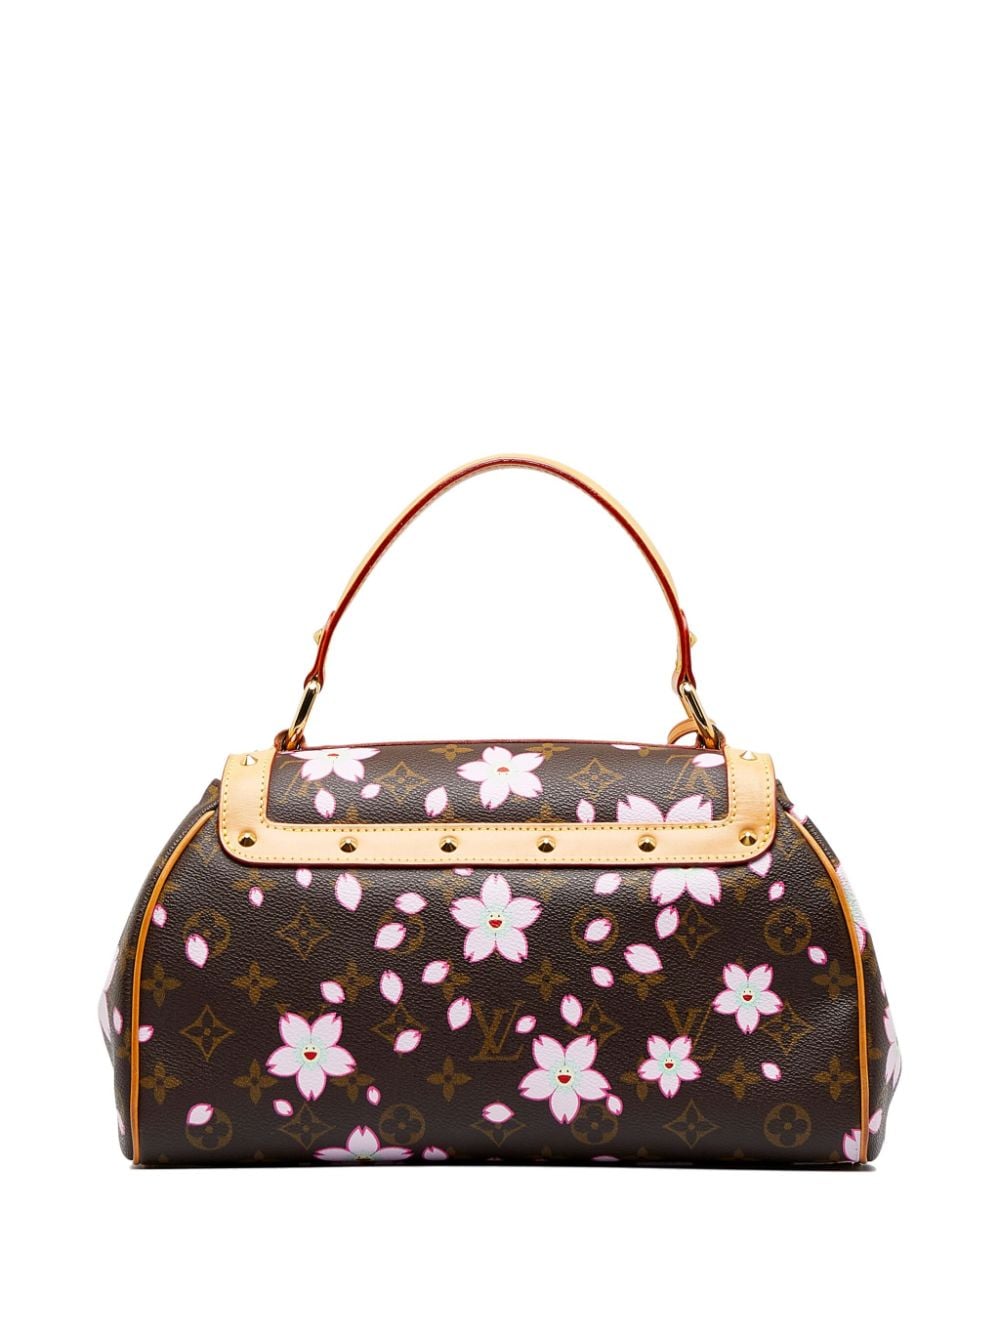 Louis Vuitton x Takashi Murakami 2003 pre-owned Monogram Cherry Blossom Sac Retro handbag - Bruin